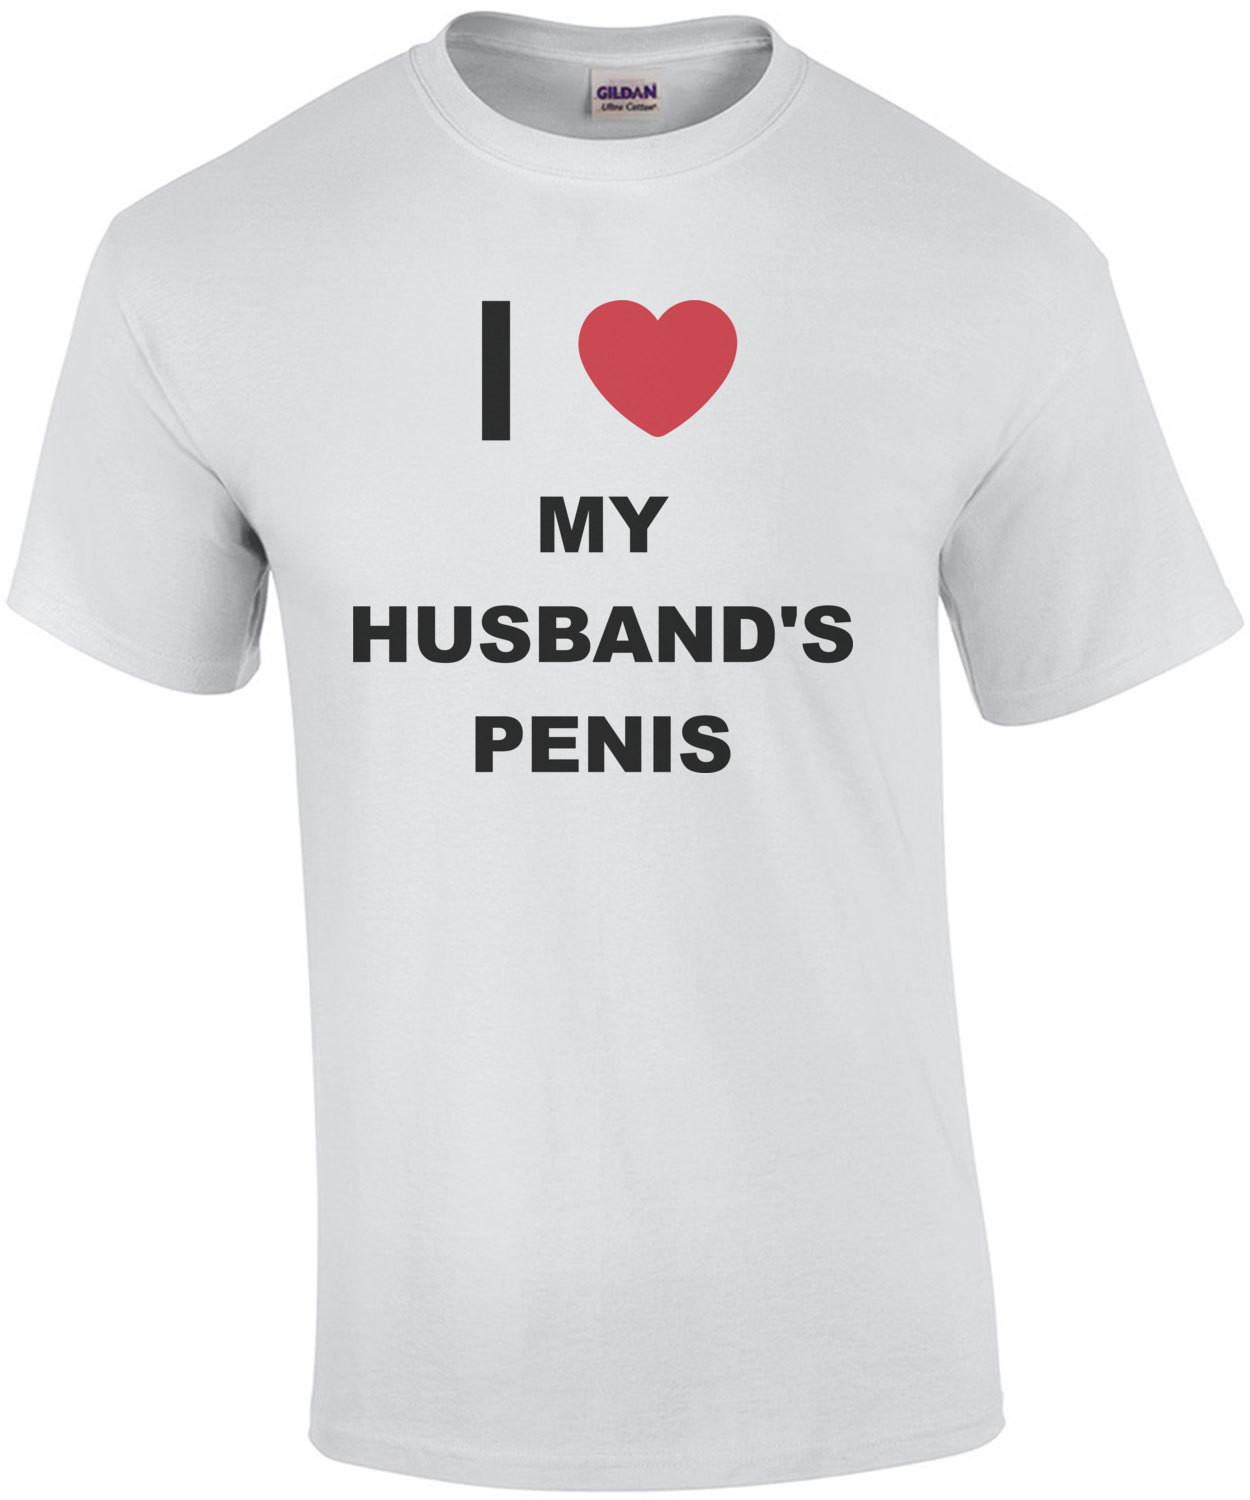 I love my husband's penis - funny t-shirt